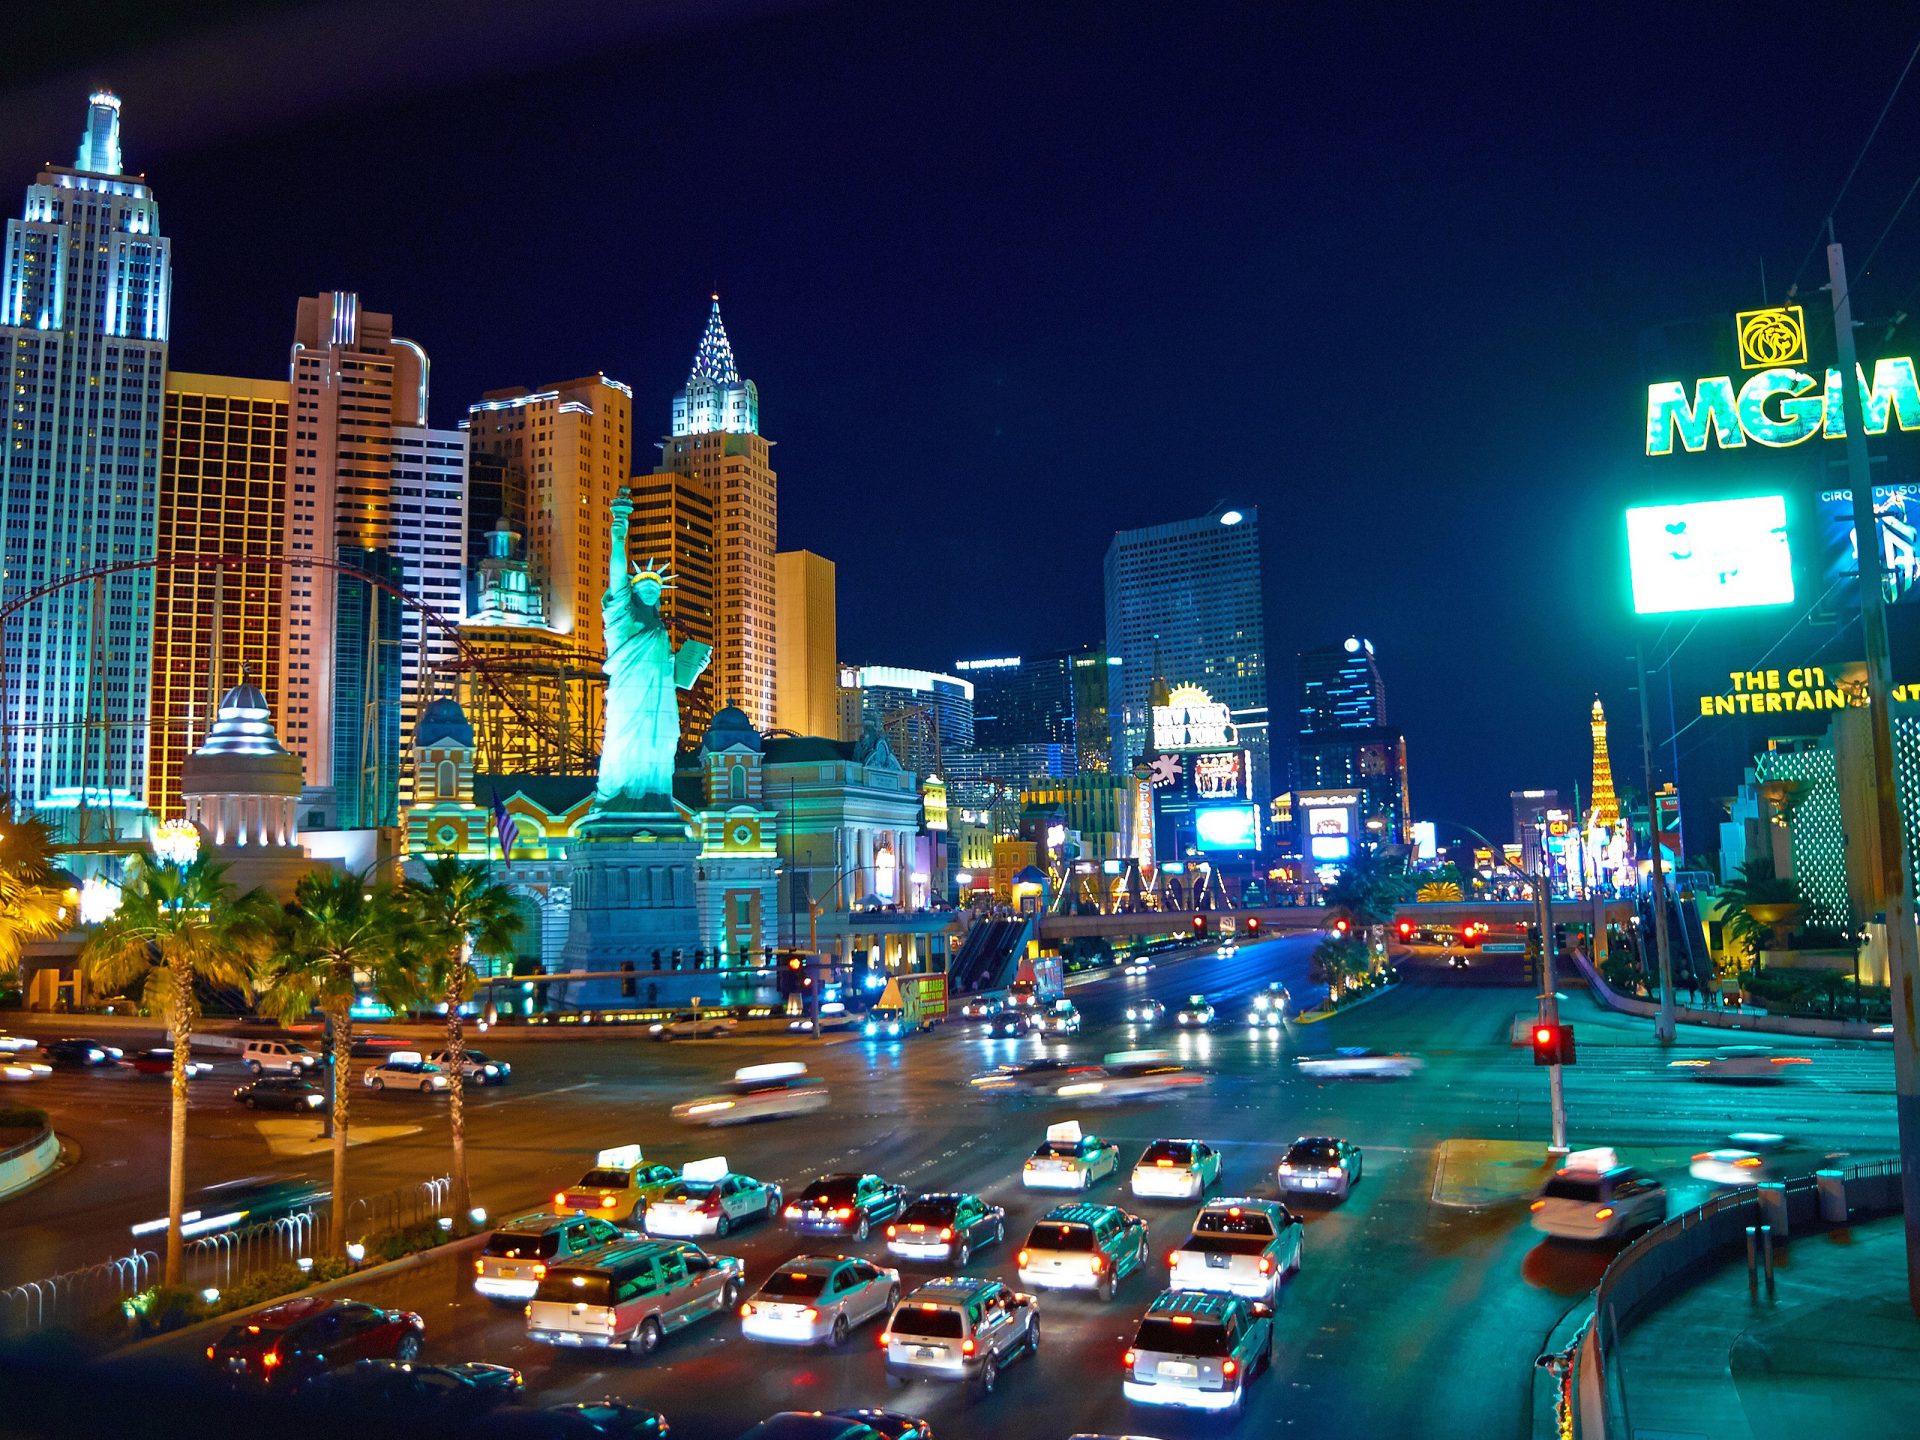 New York Hotel Amp Casino In Las Vegas Nevada Usa Desktop